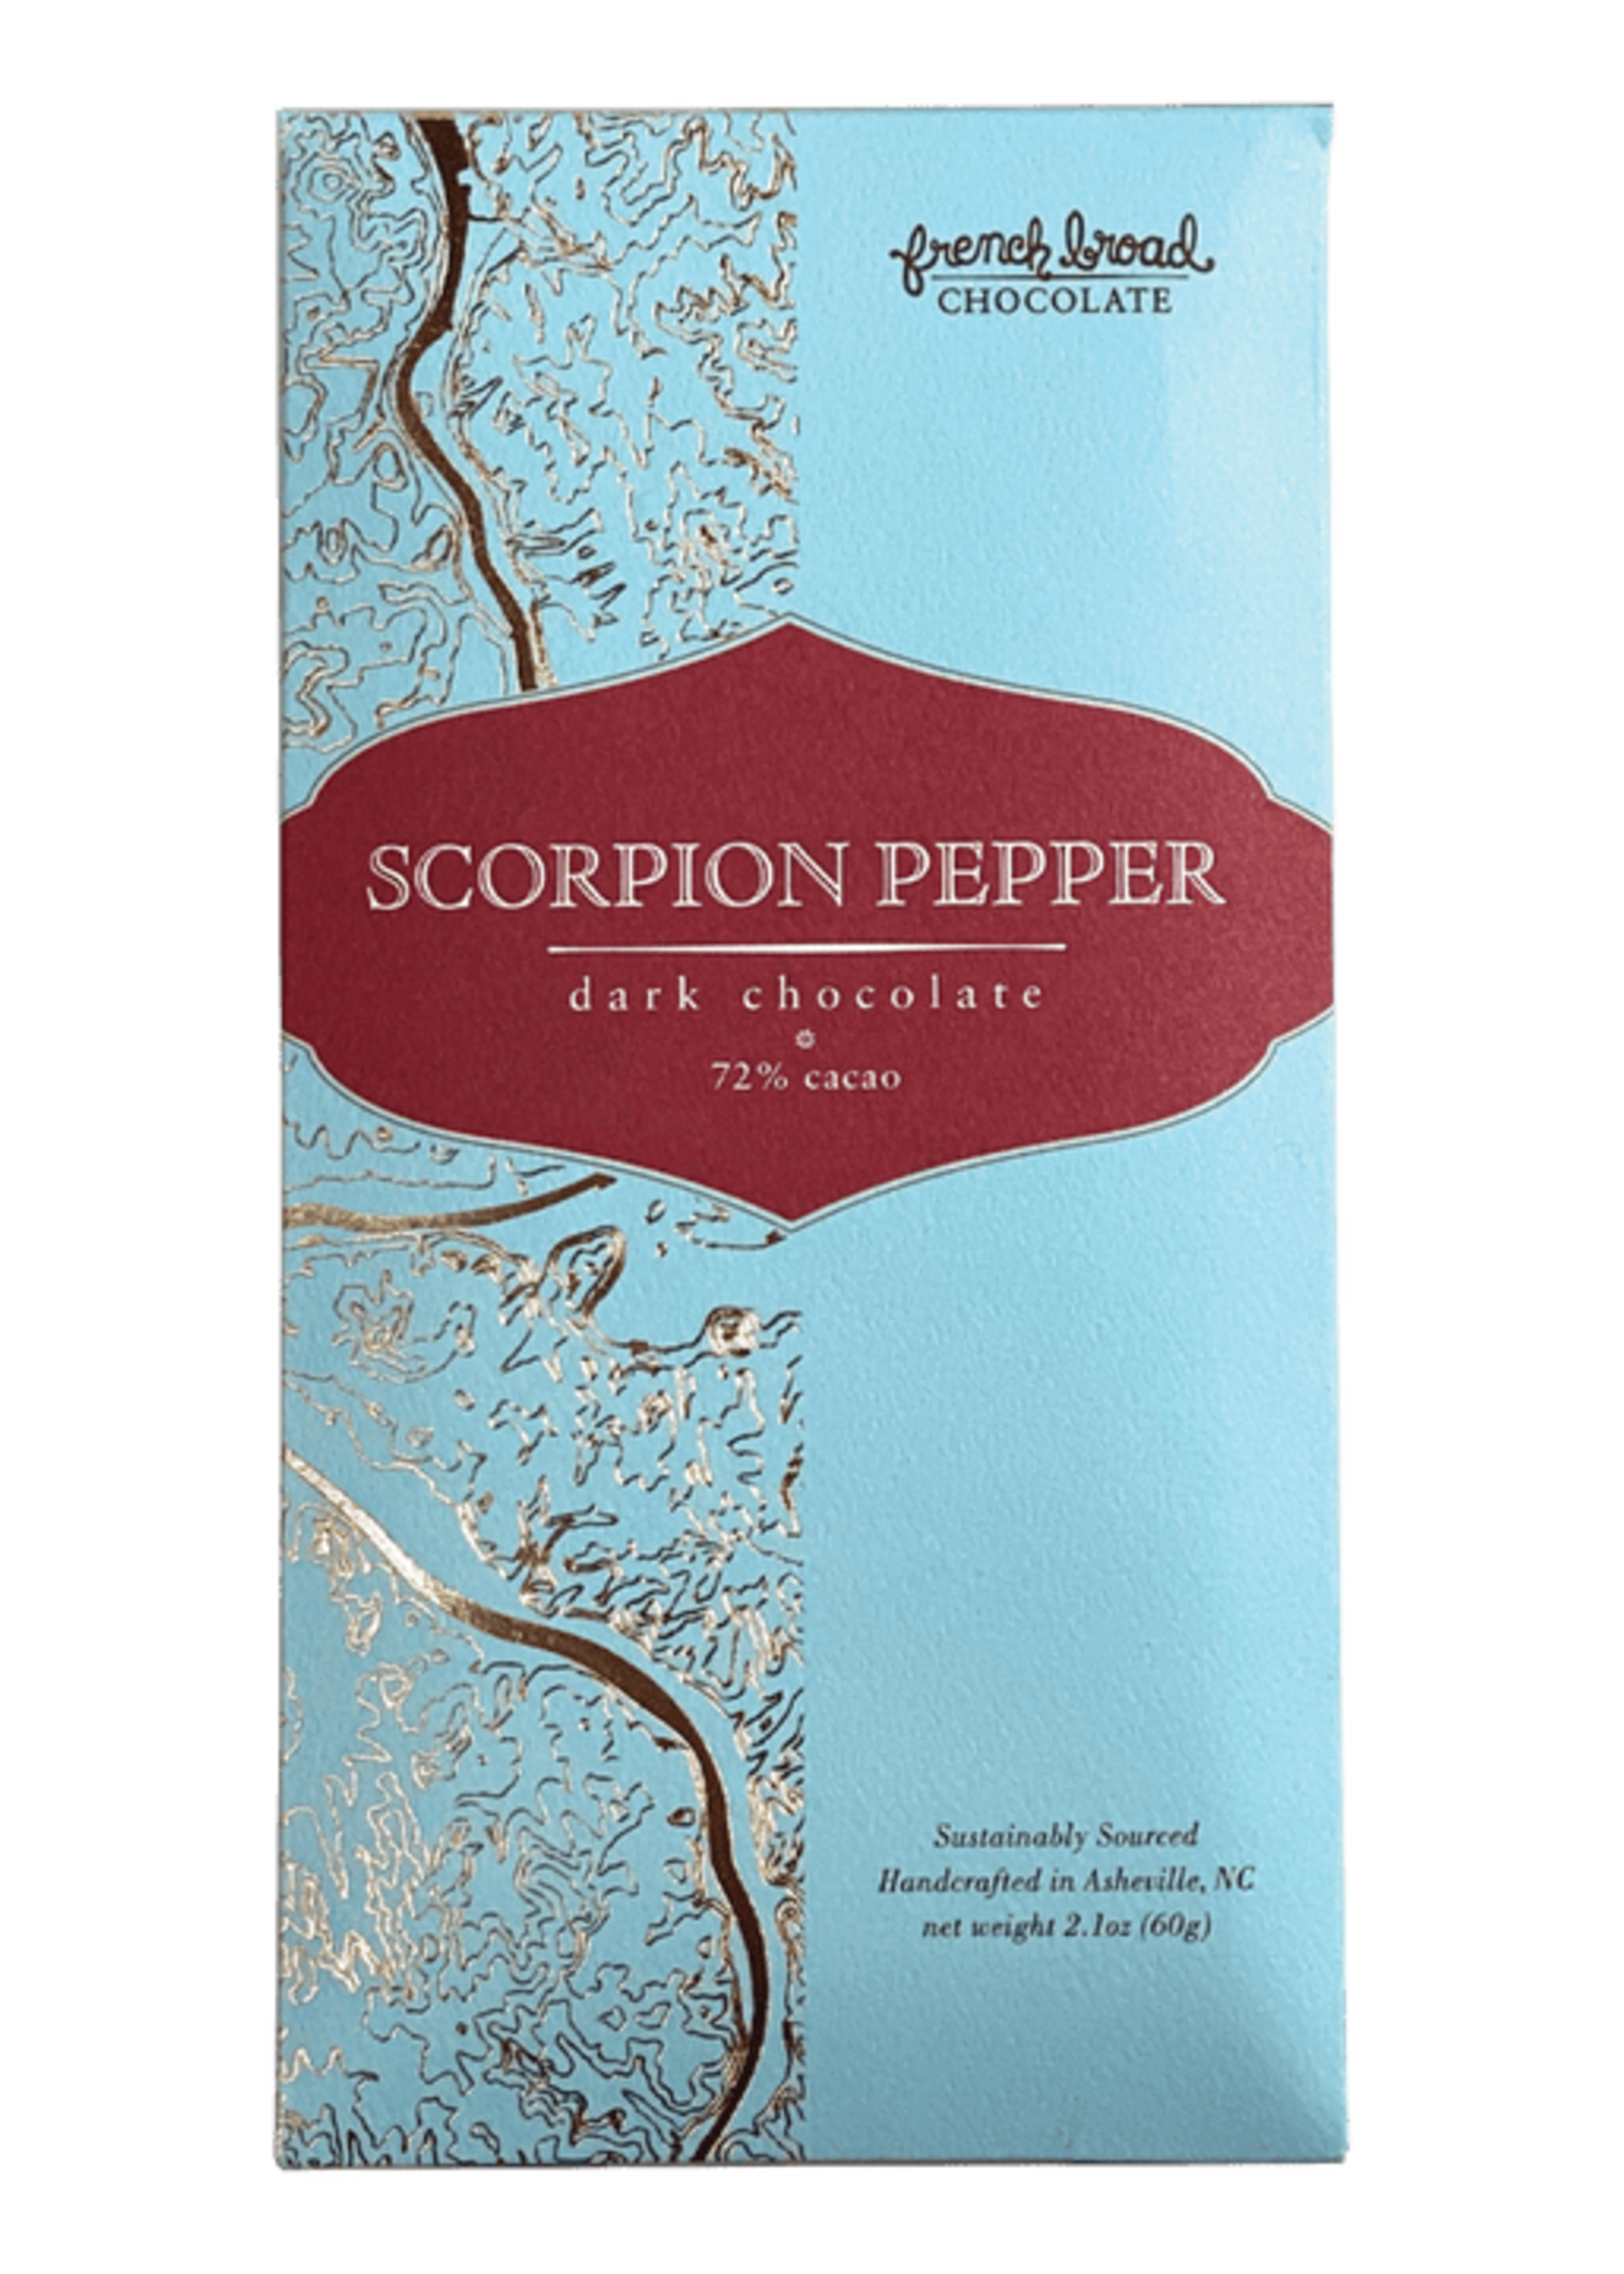 French Broad Chocolates 60g  Scorpion Pepper Dark Chocolate Bar